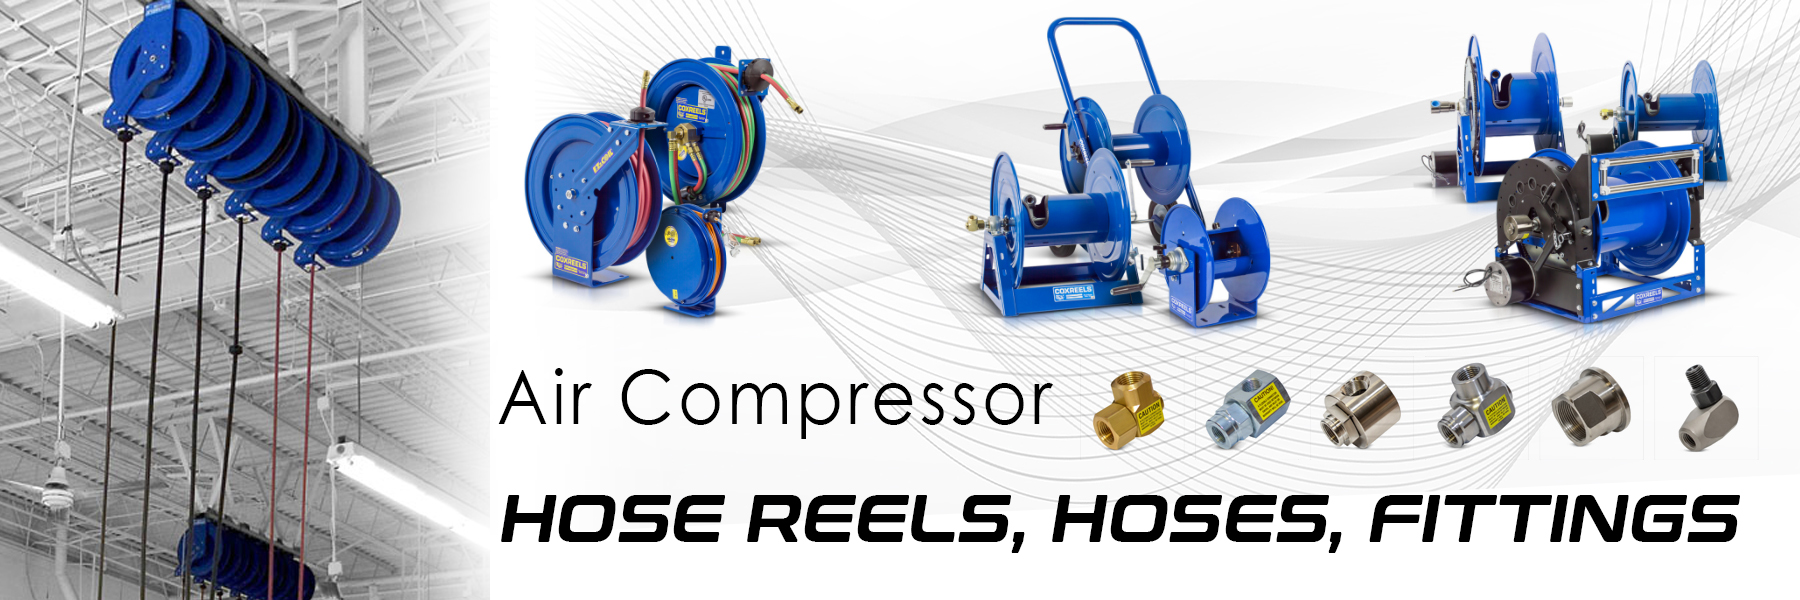 Air Compressor Hose Reels, Hoses, Fittings